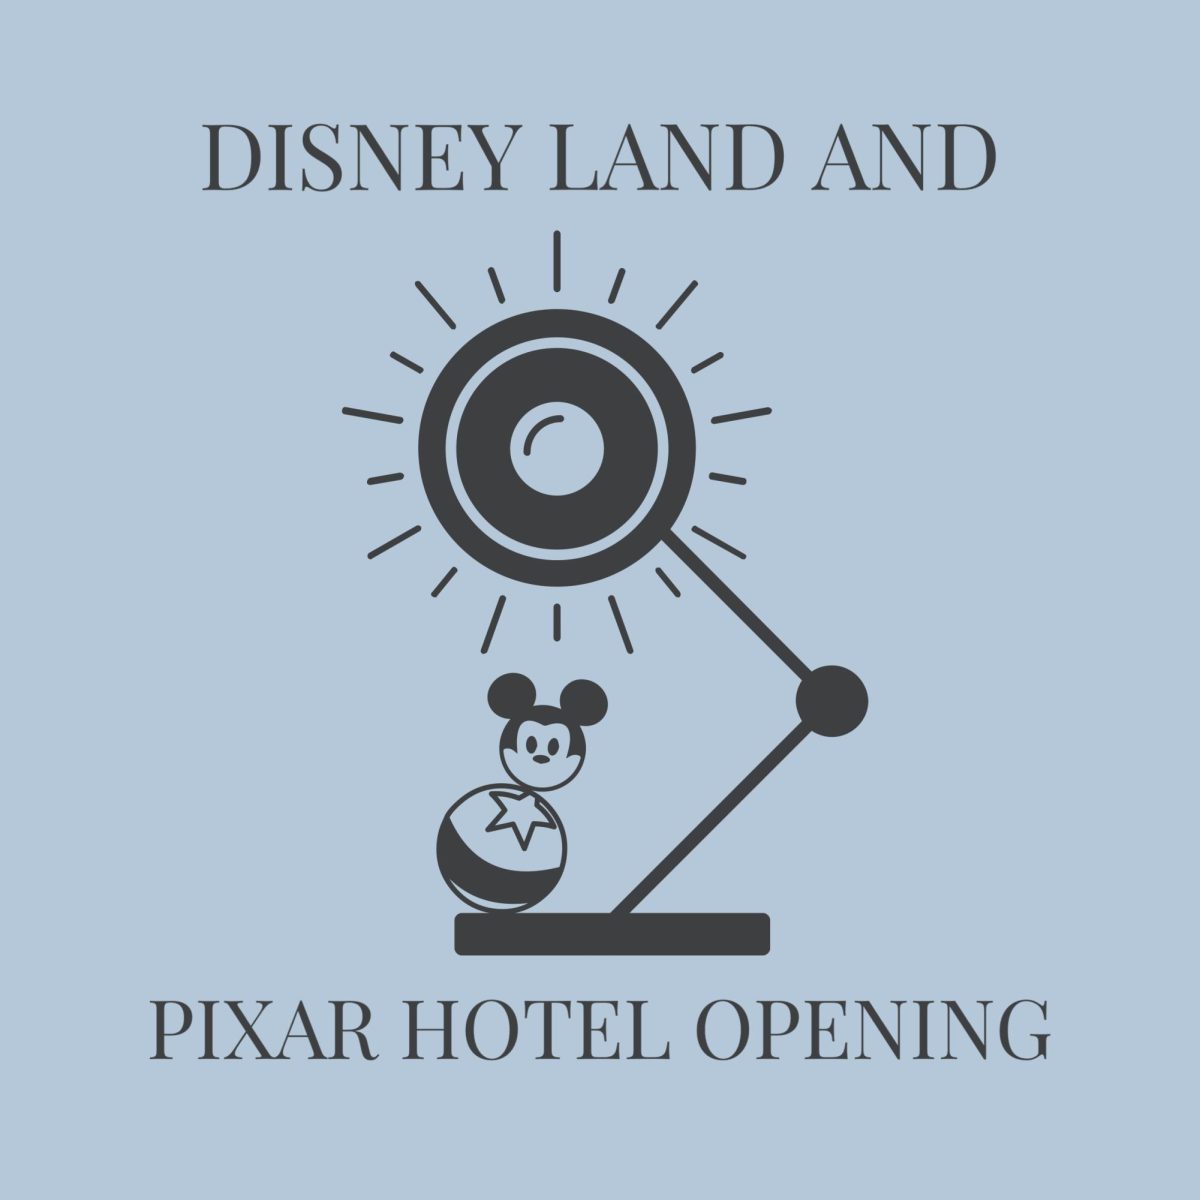 Disneyland reveals opening date of Pixar-themed hotel